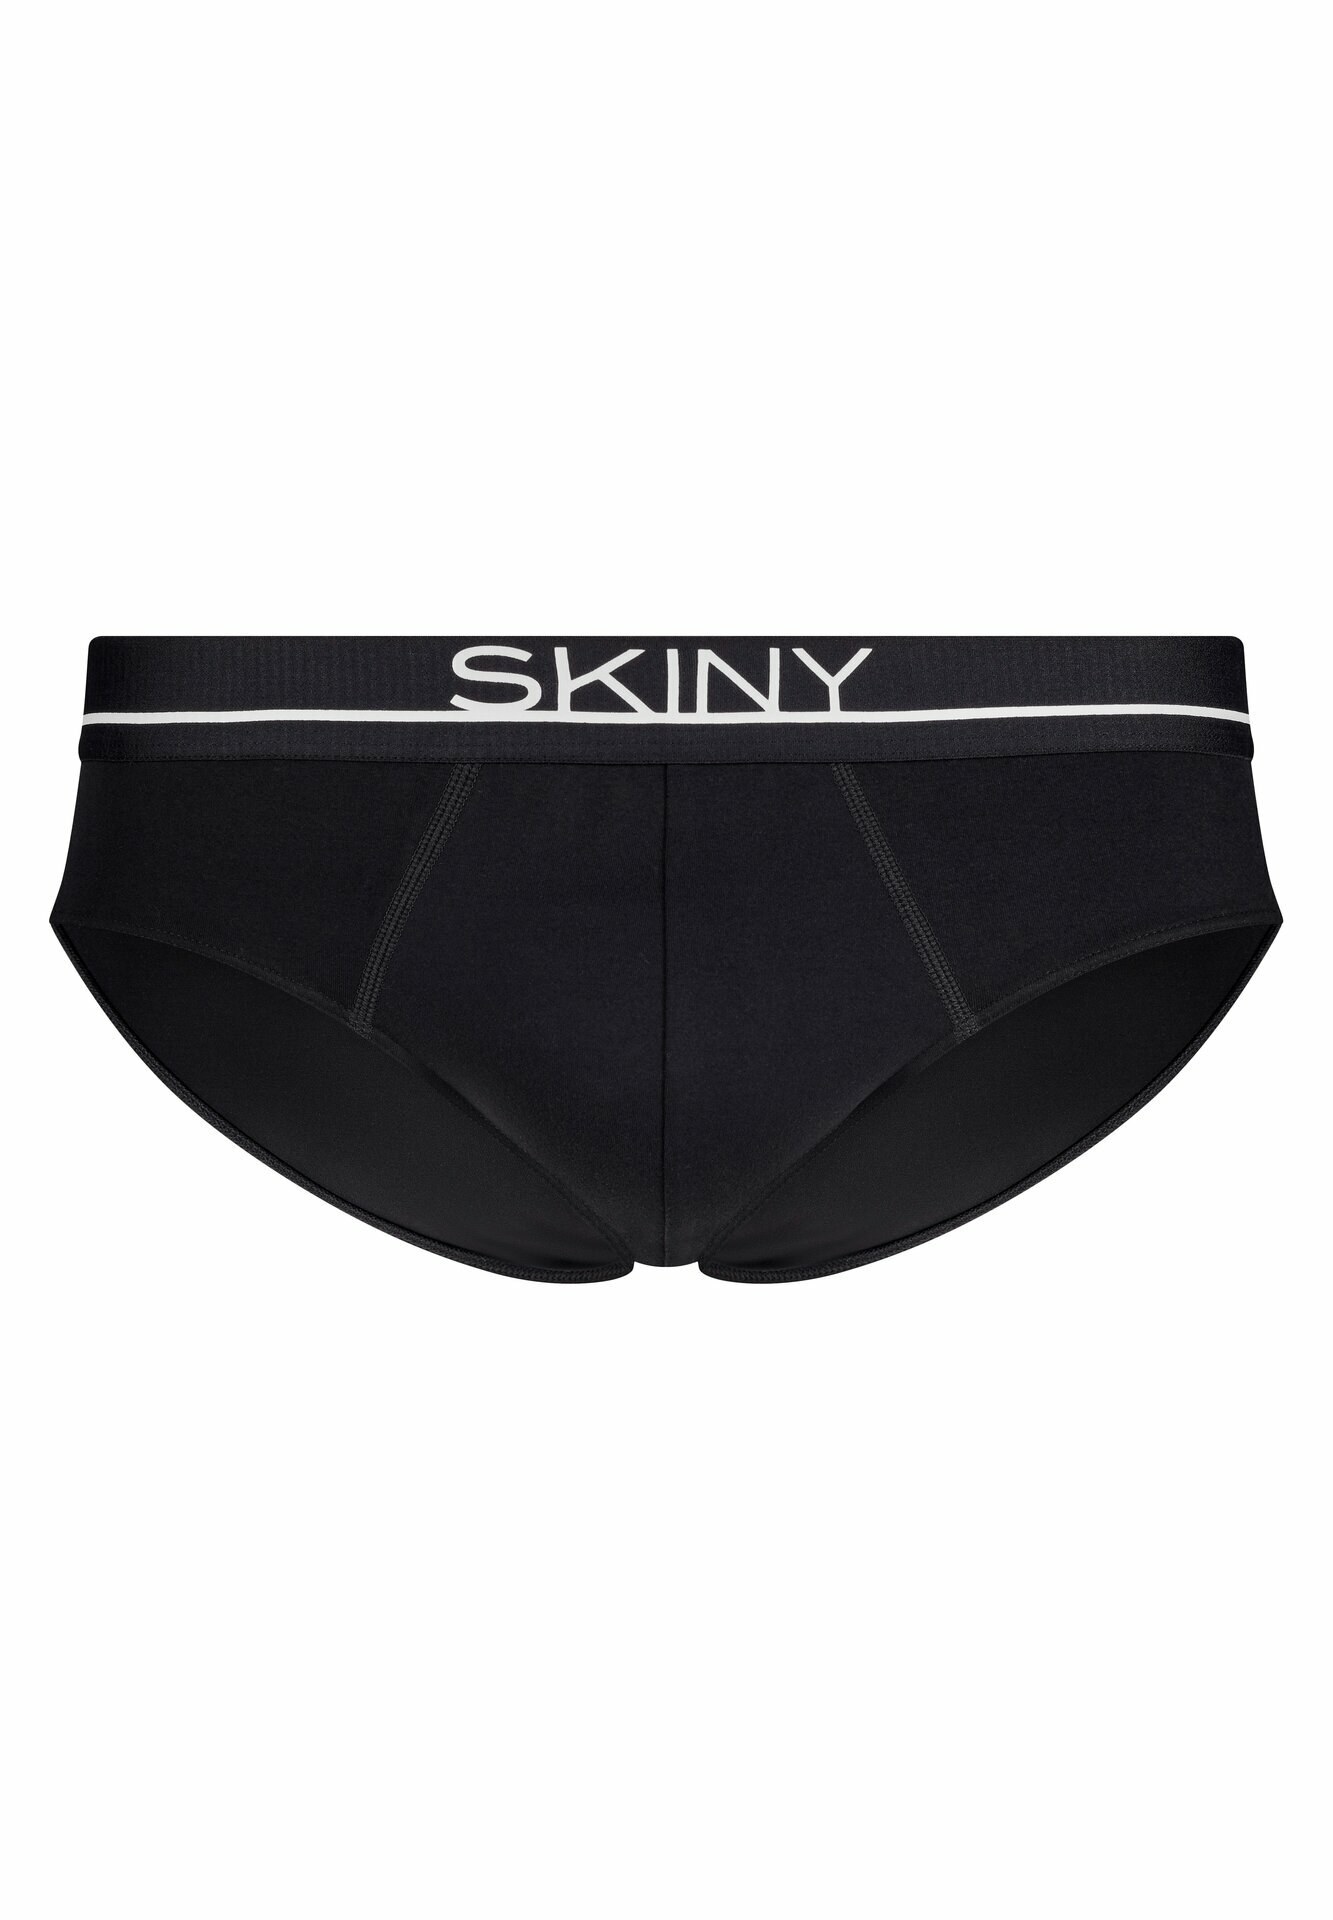 Skiny Men Daywear Micro Deluxe Herren Brasil Slip